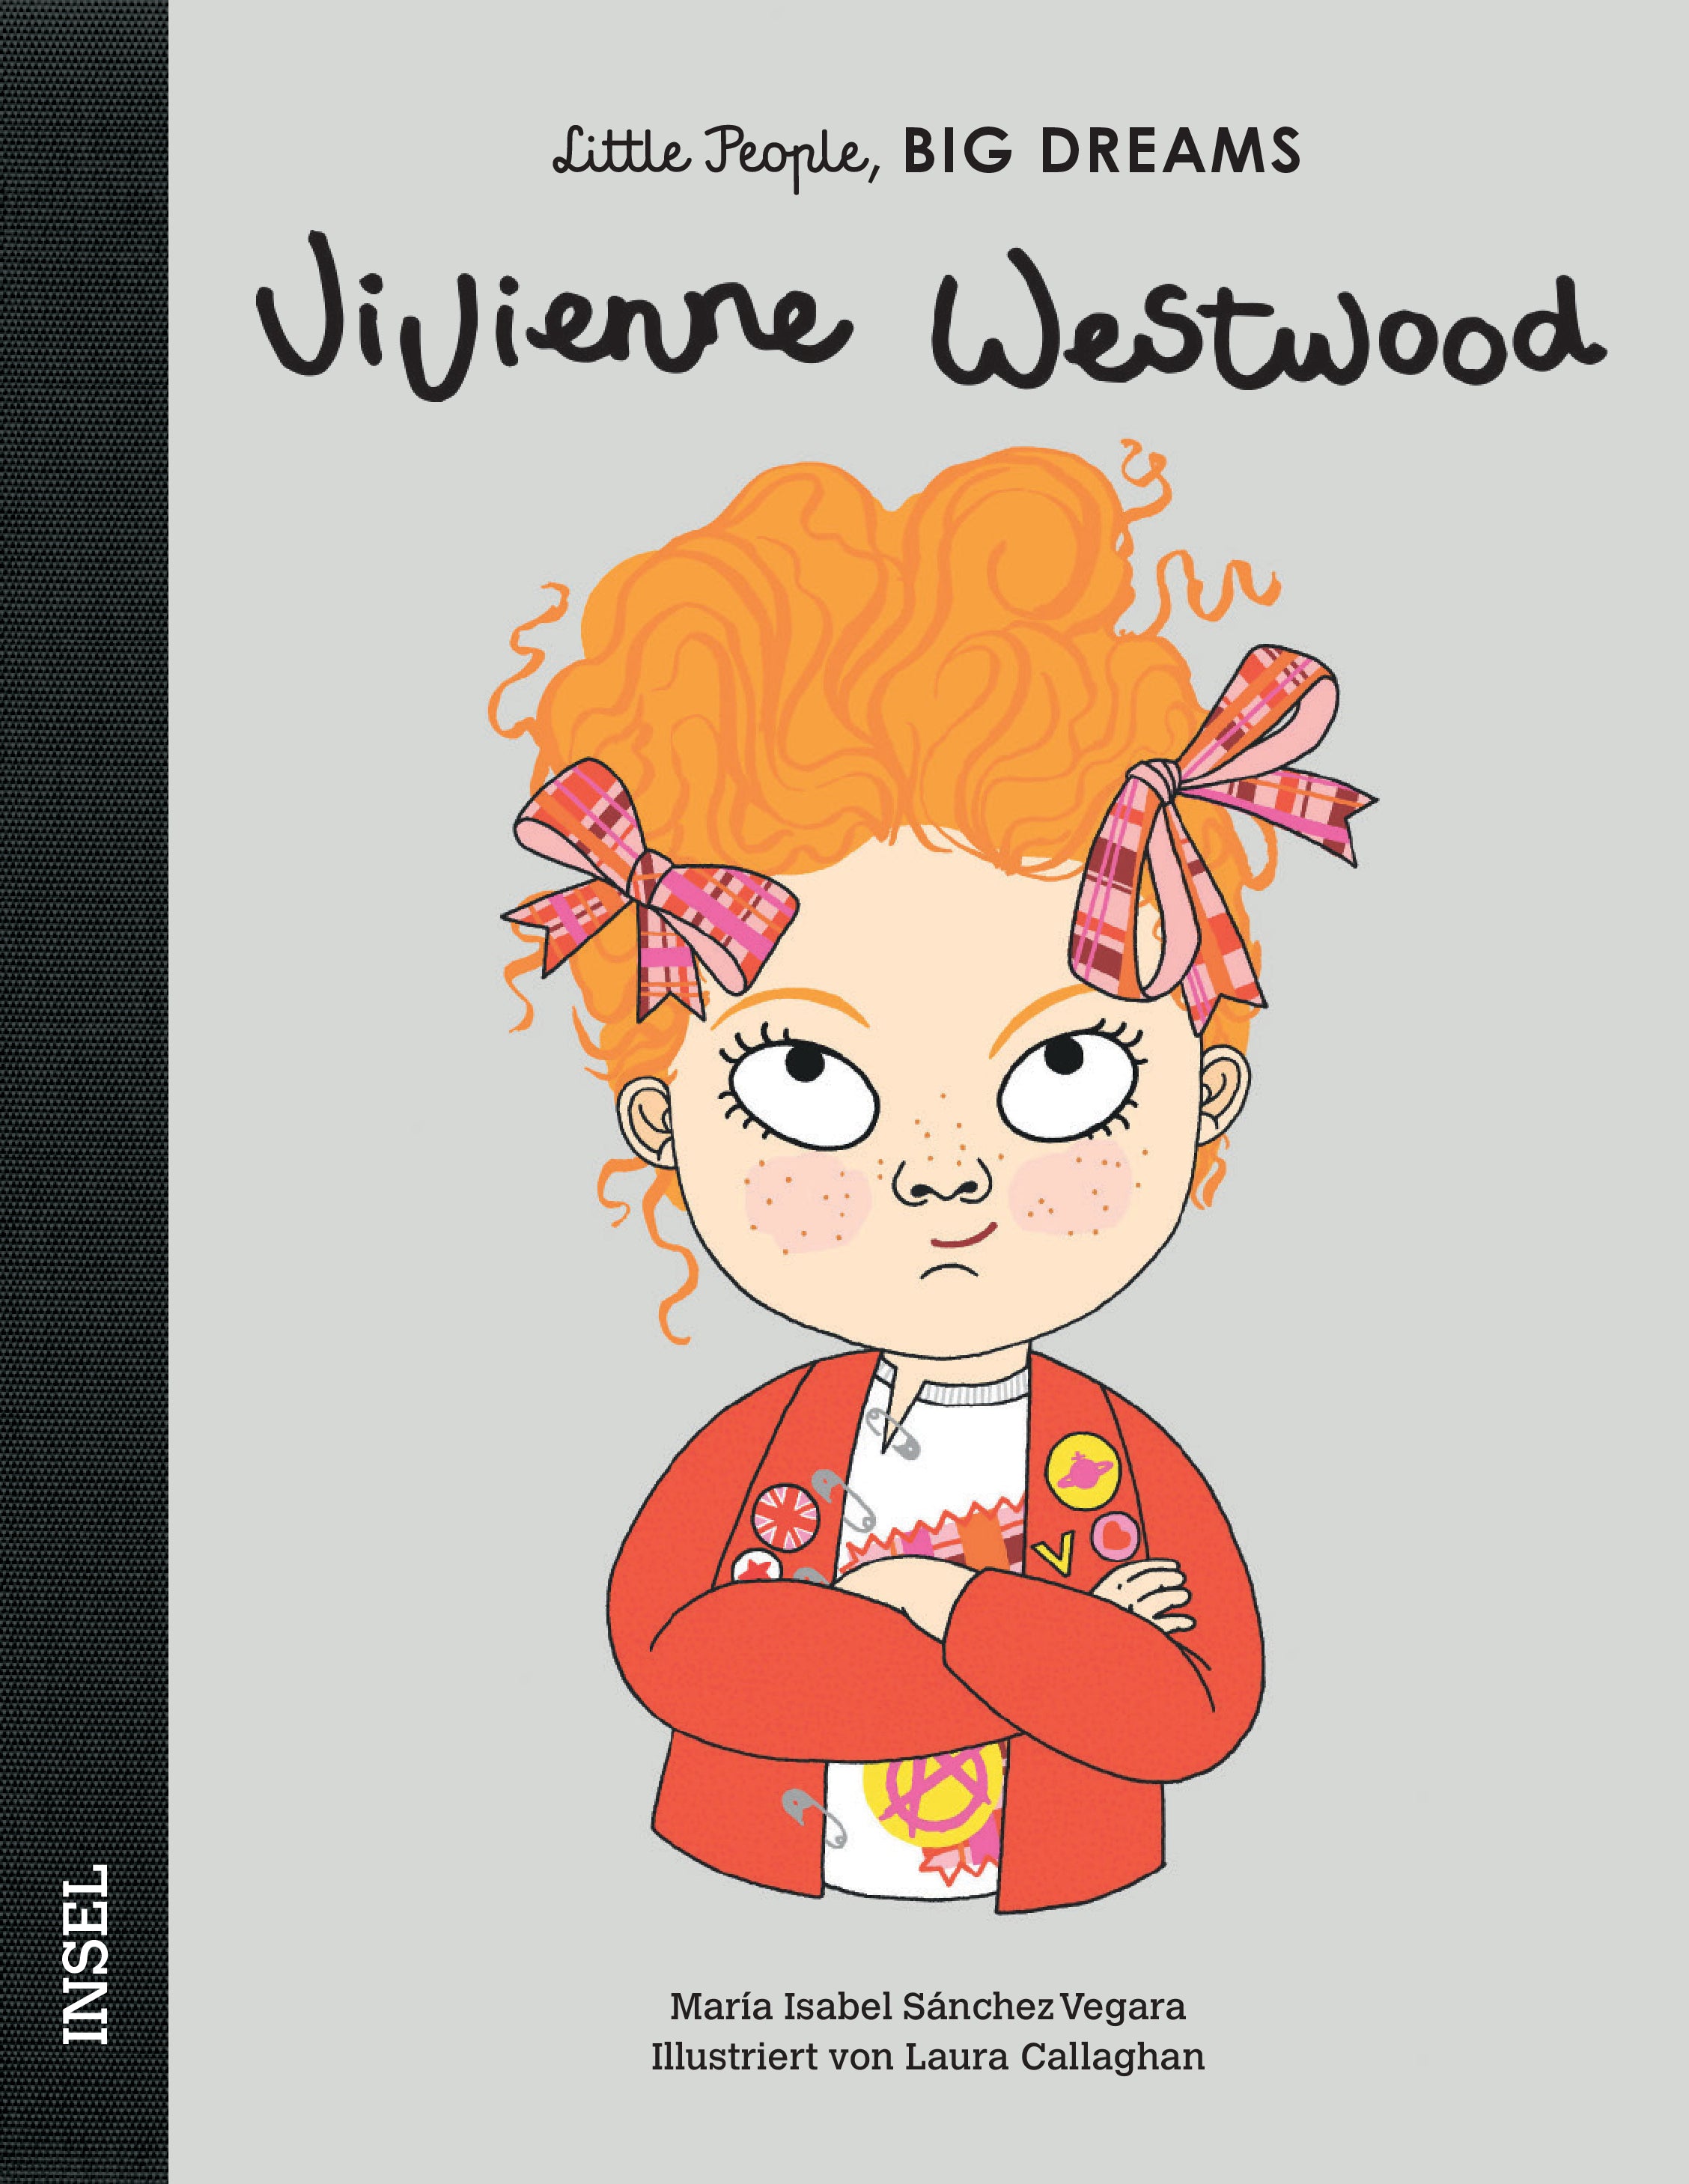 Little People - Vivienne Westwood